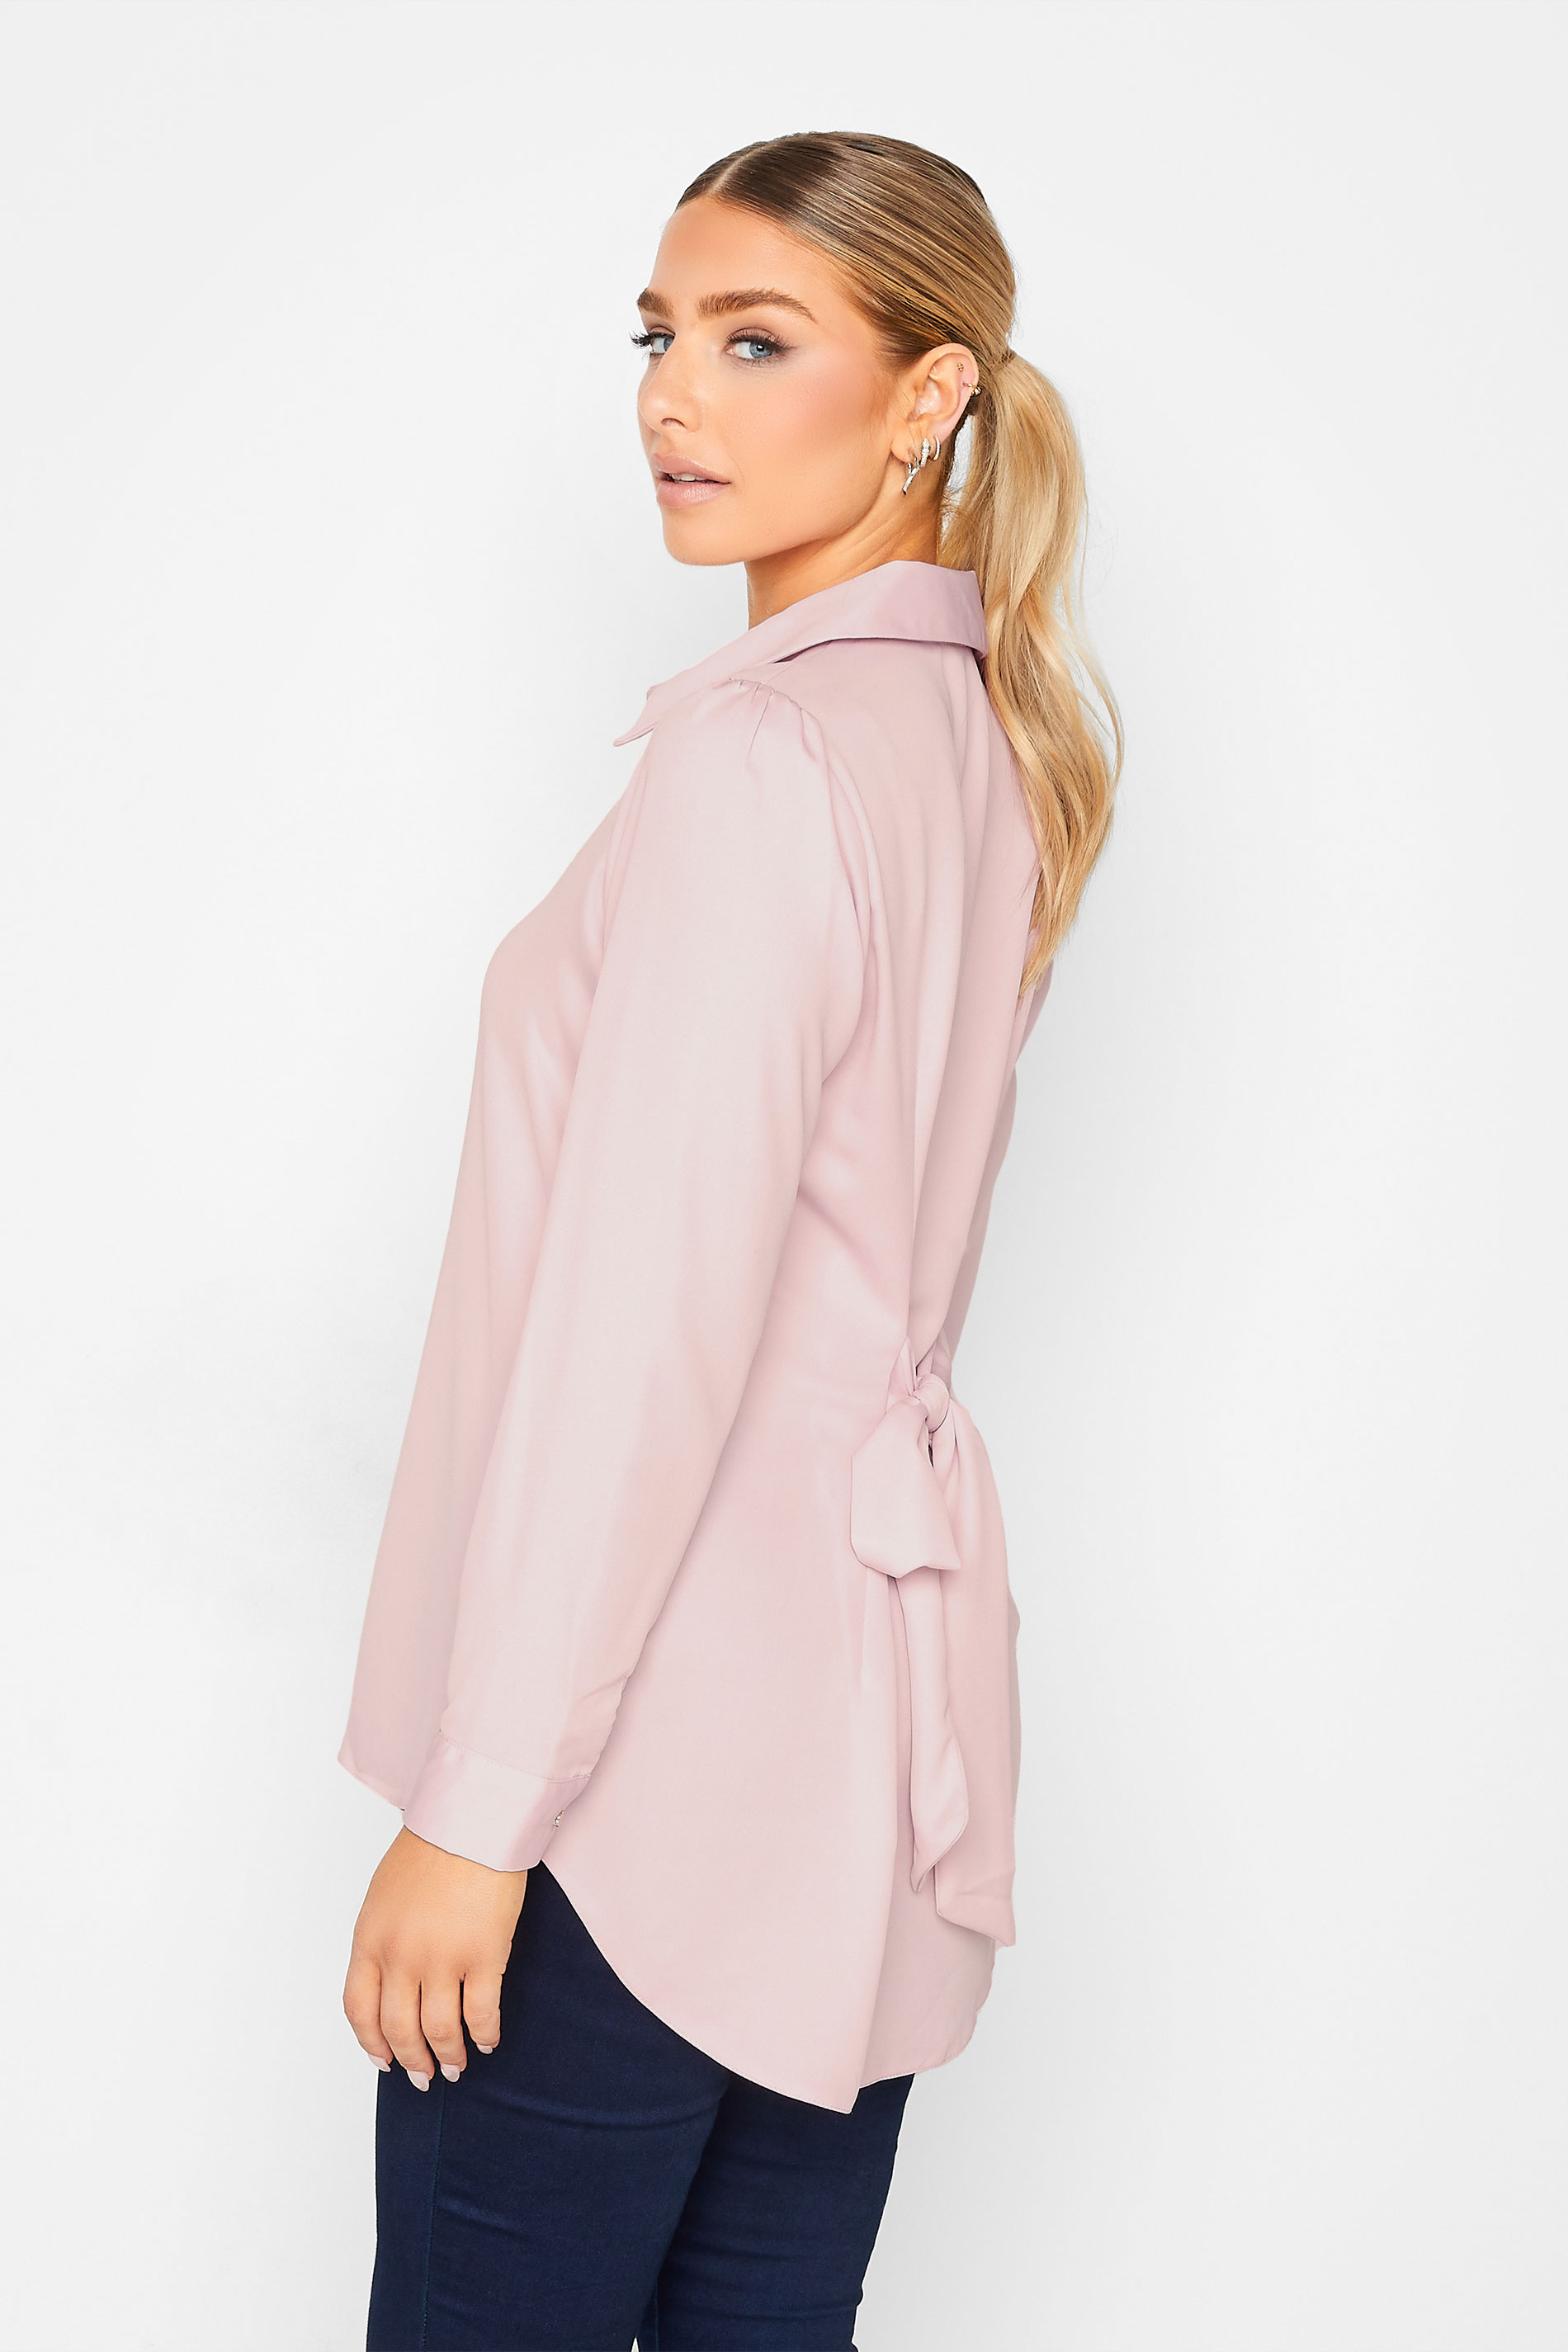 M&Co Light Pink Tie Back Tunic Shirt | M&Co 3